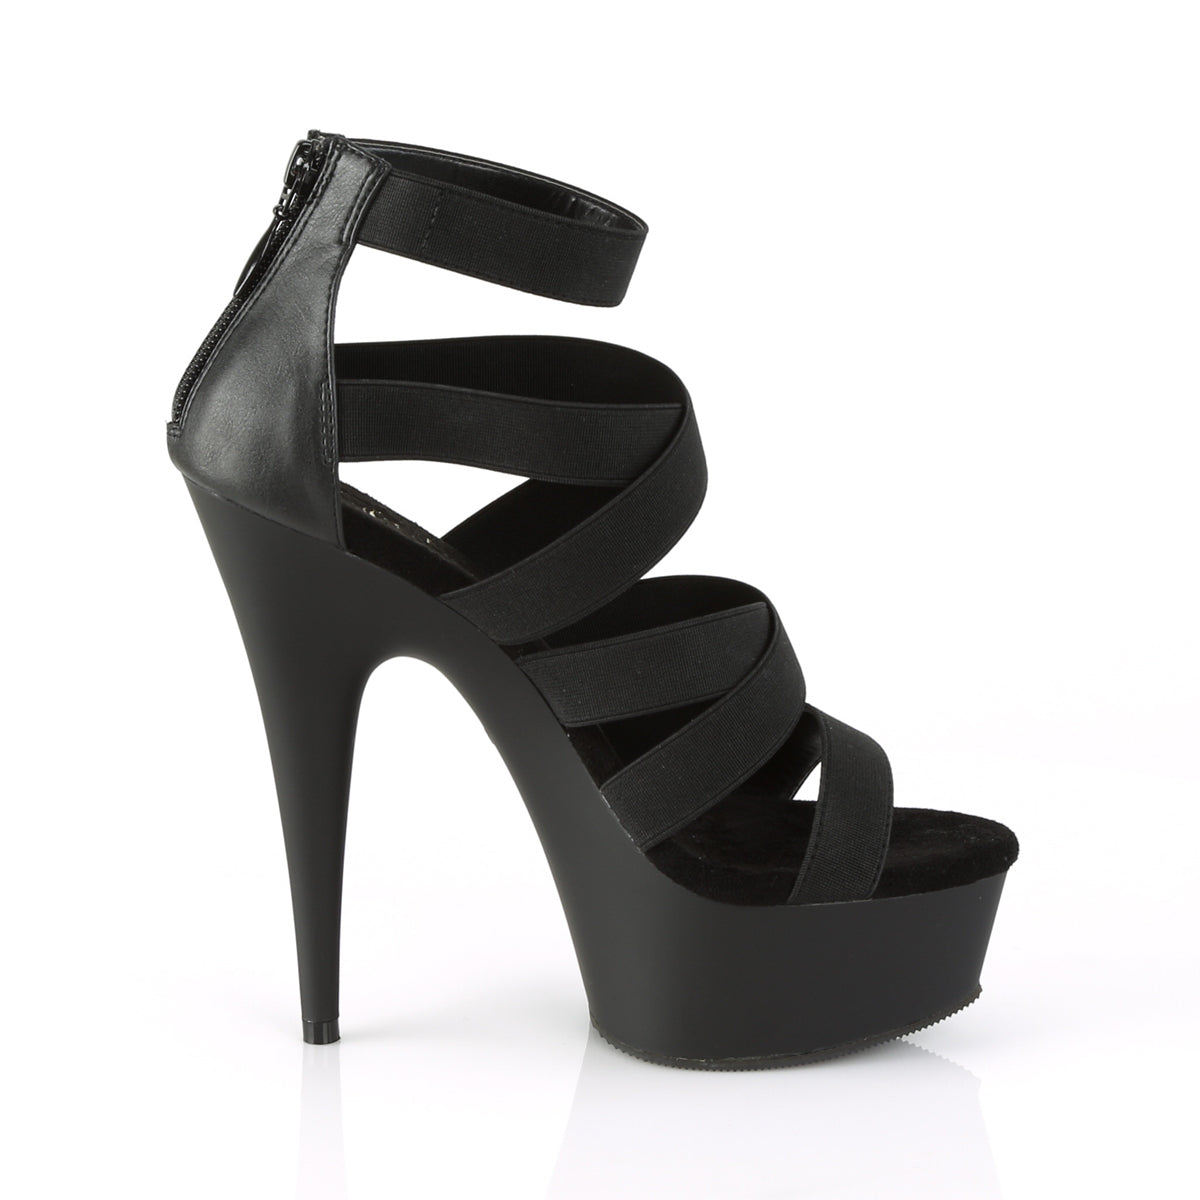 DELIGHT-659 Black Ankle Sandal High Heel